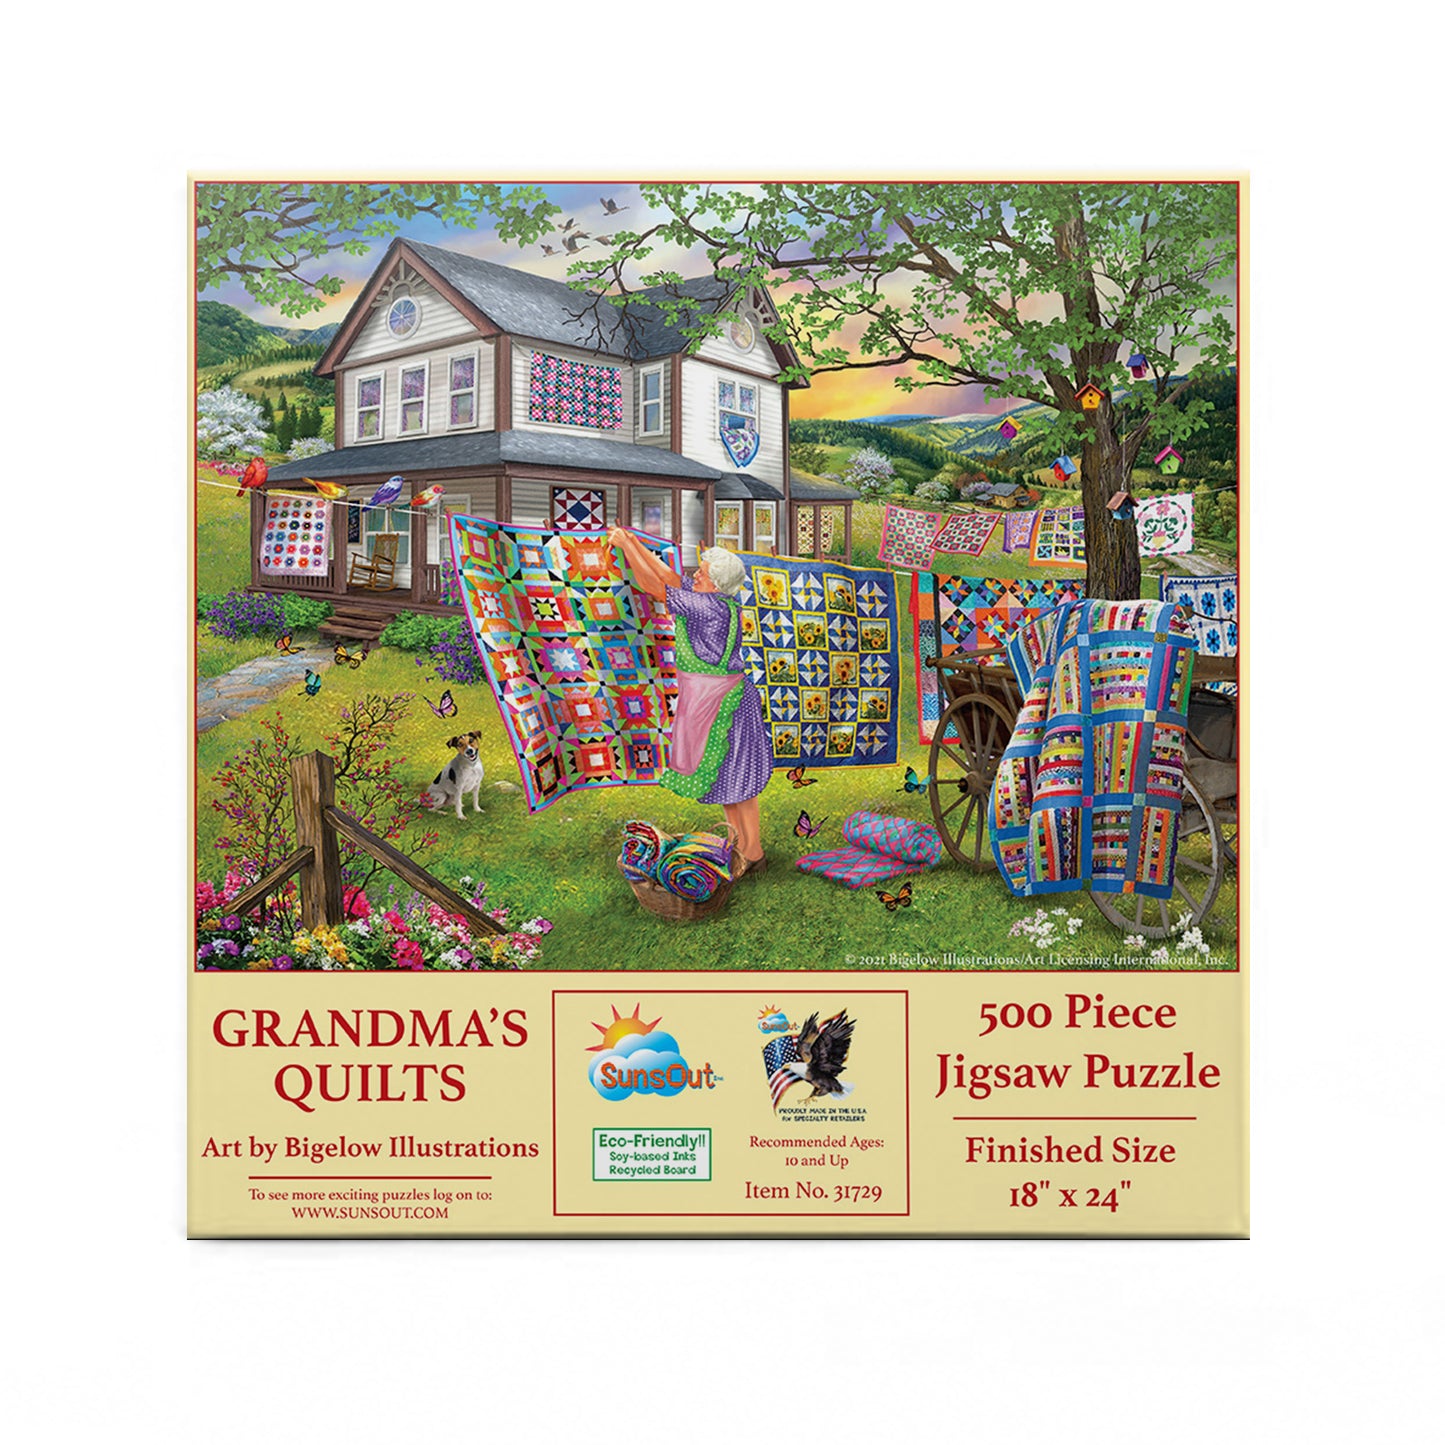 Grandma's Quilts - 500 Piece Jigsaw Puzzle